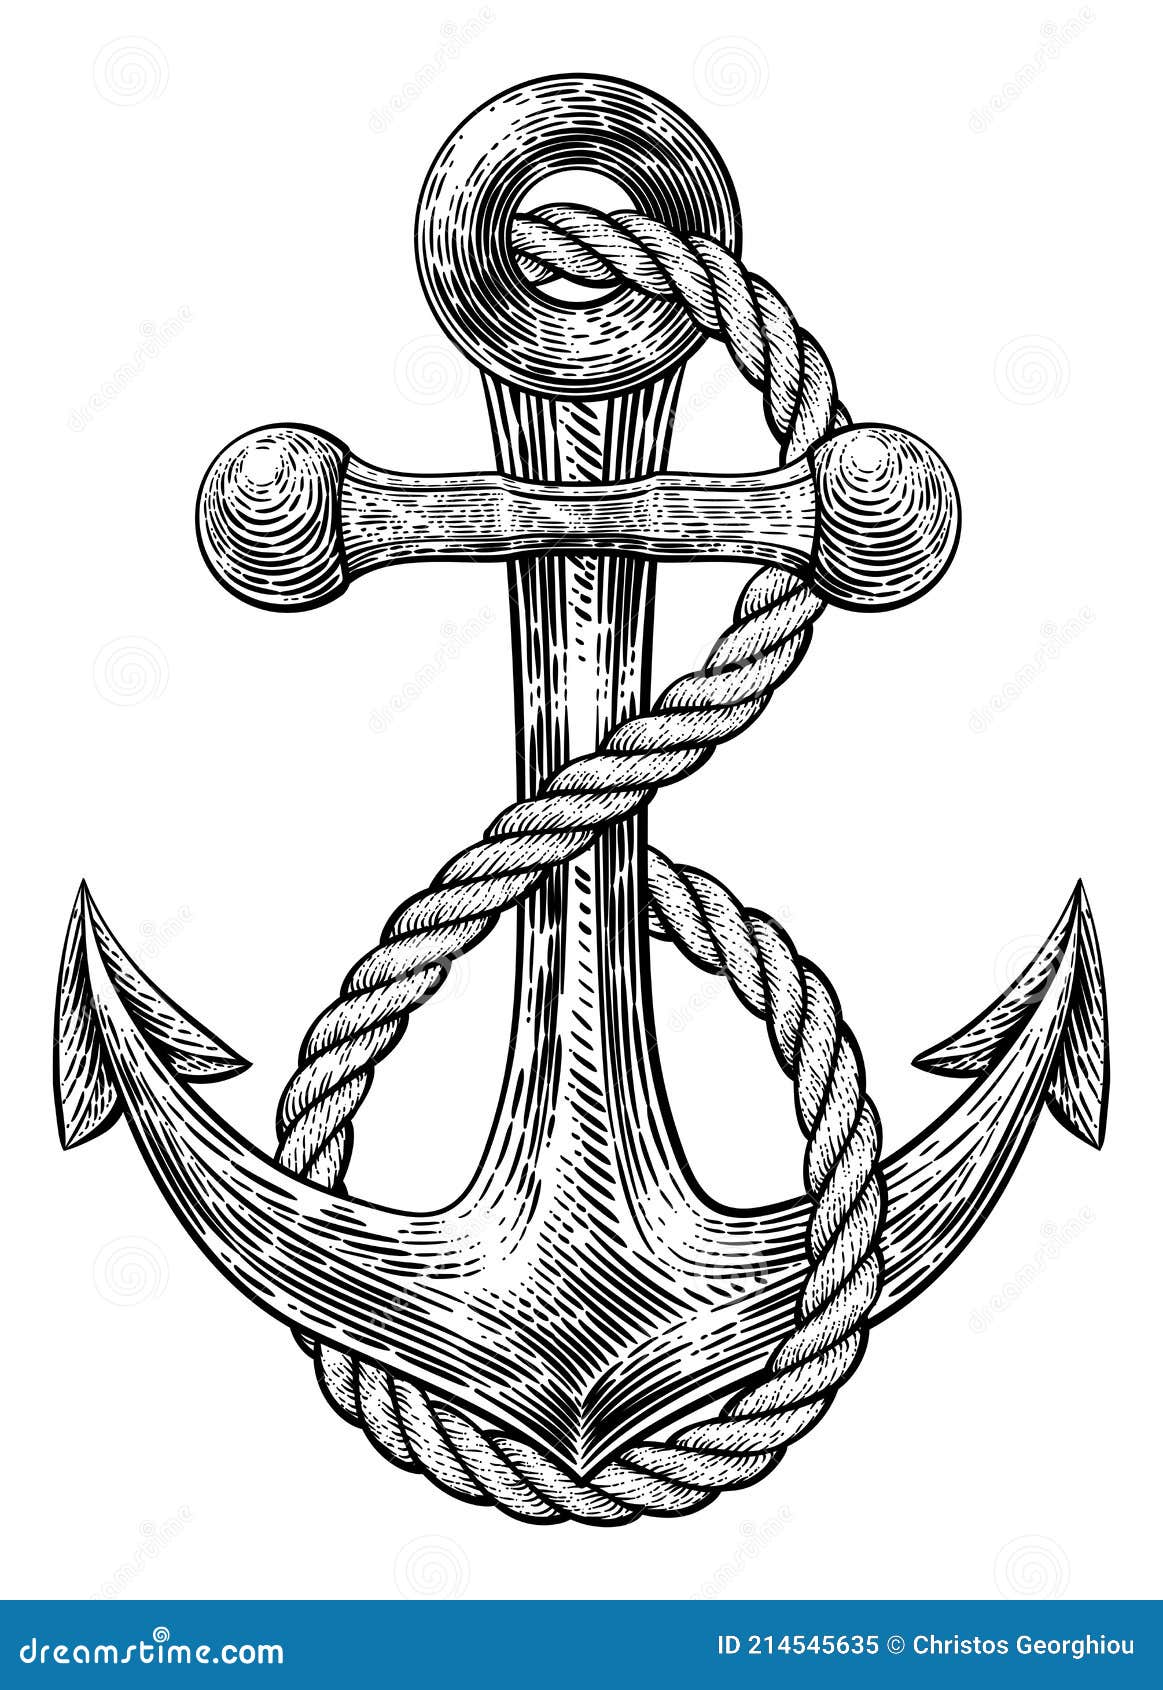 9+ Pirate Ship Tattoos Designs